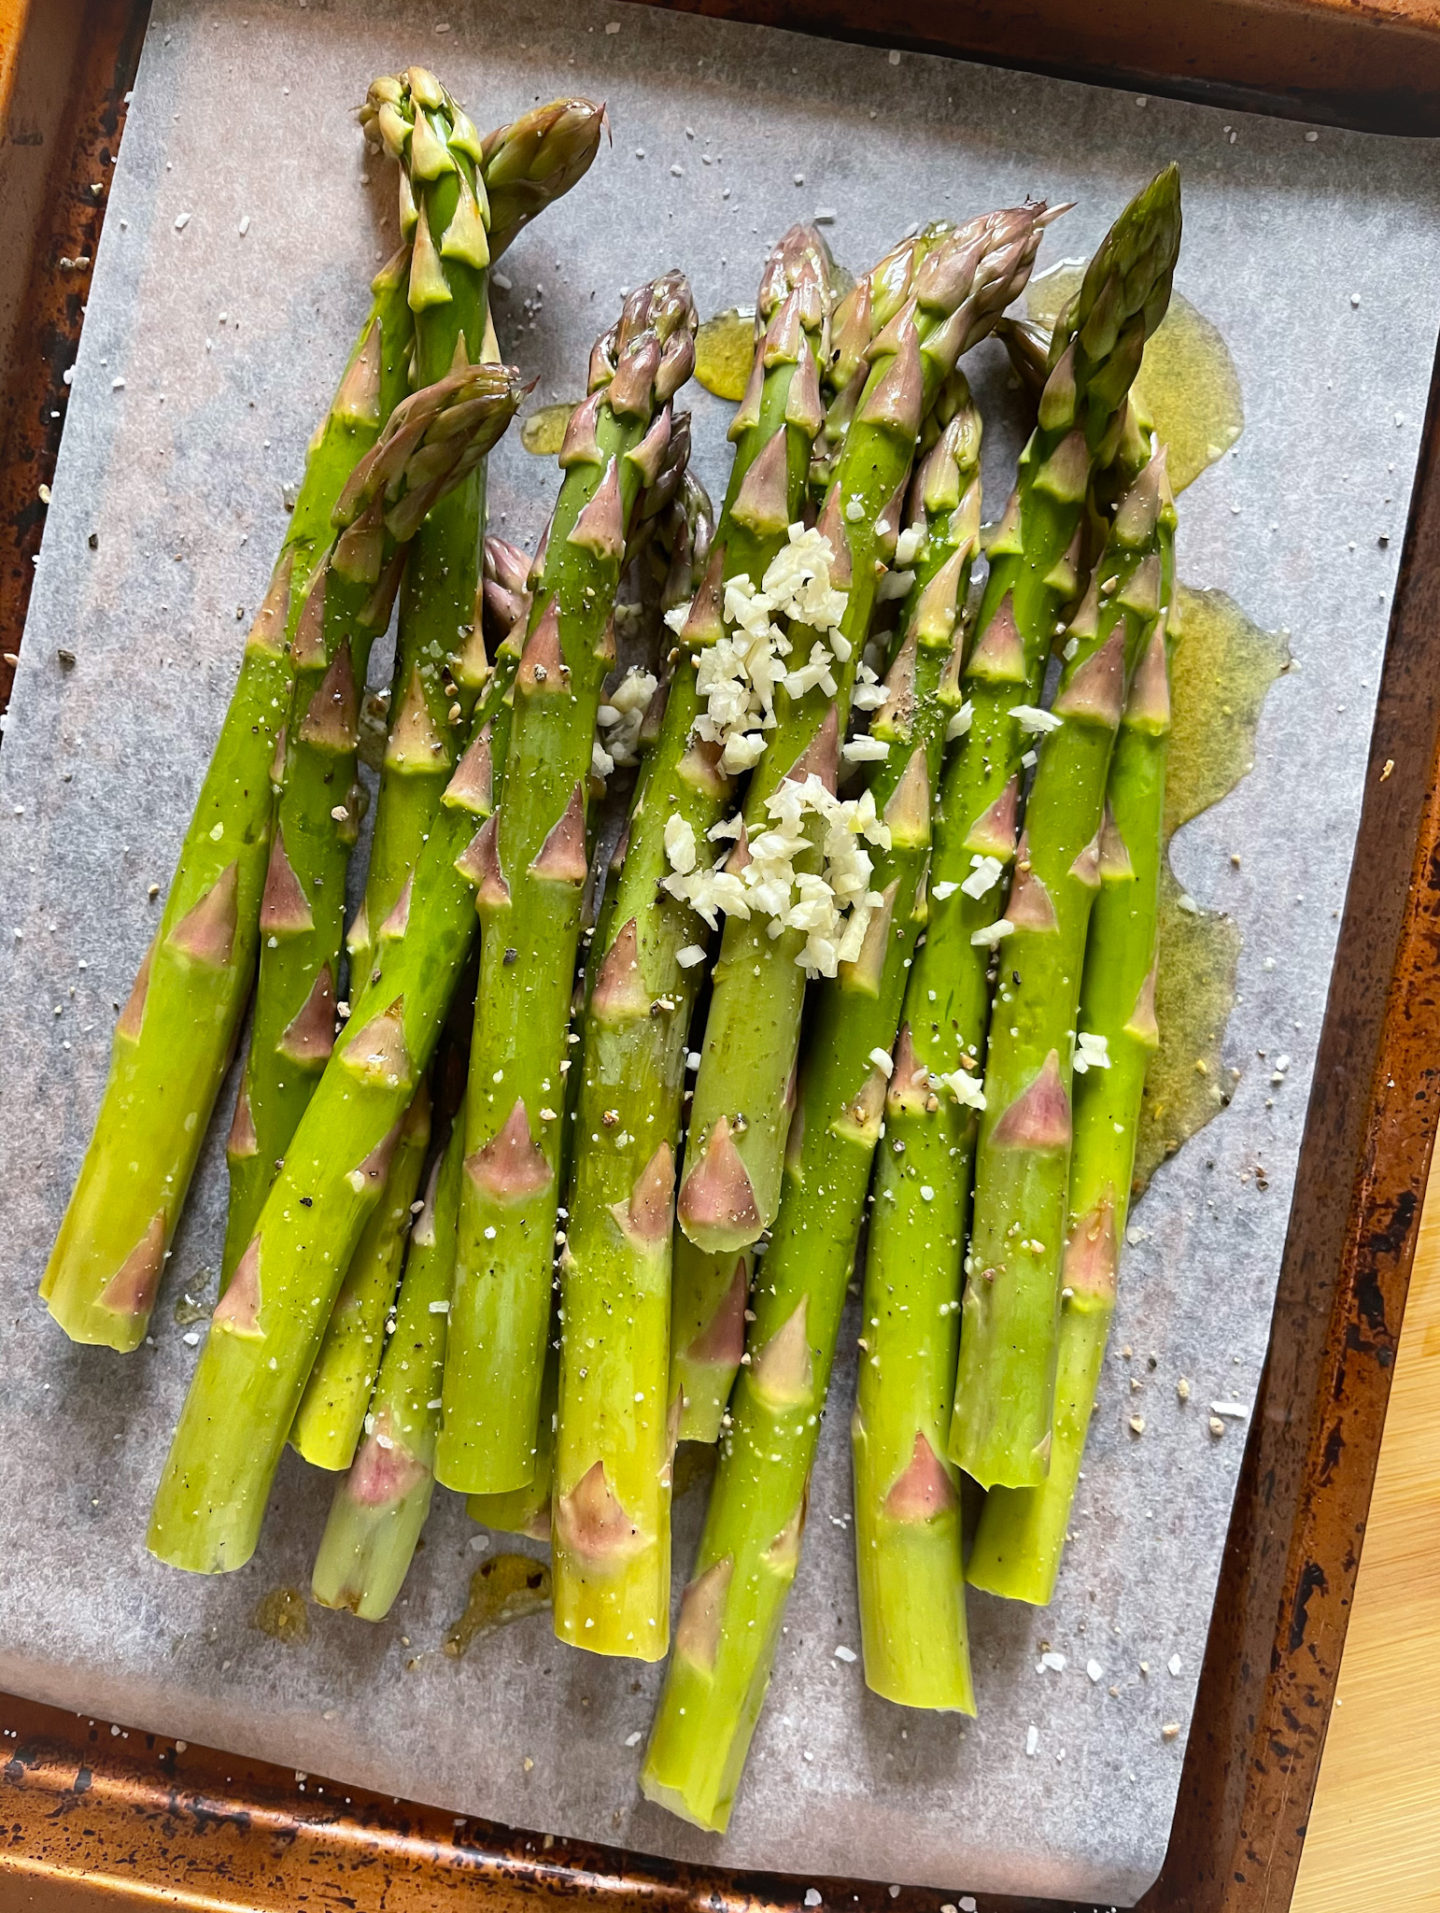 adding garlic to the asparagus